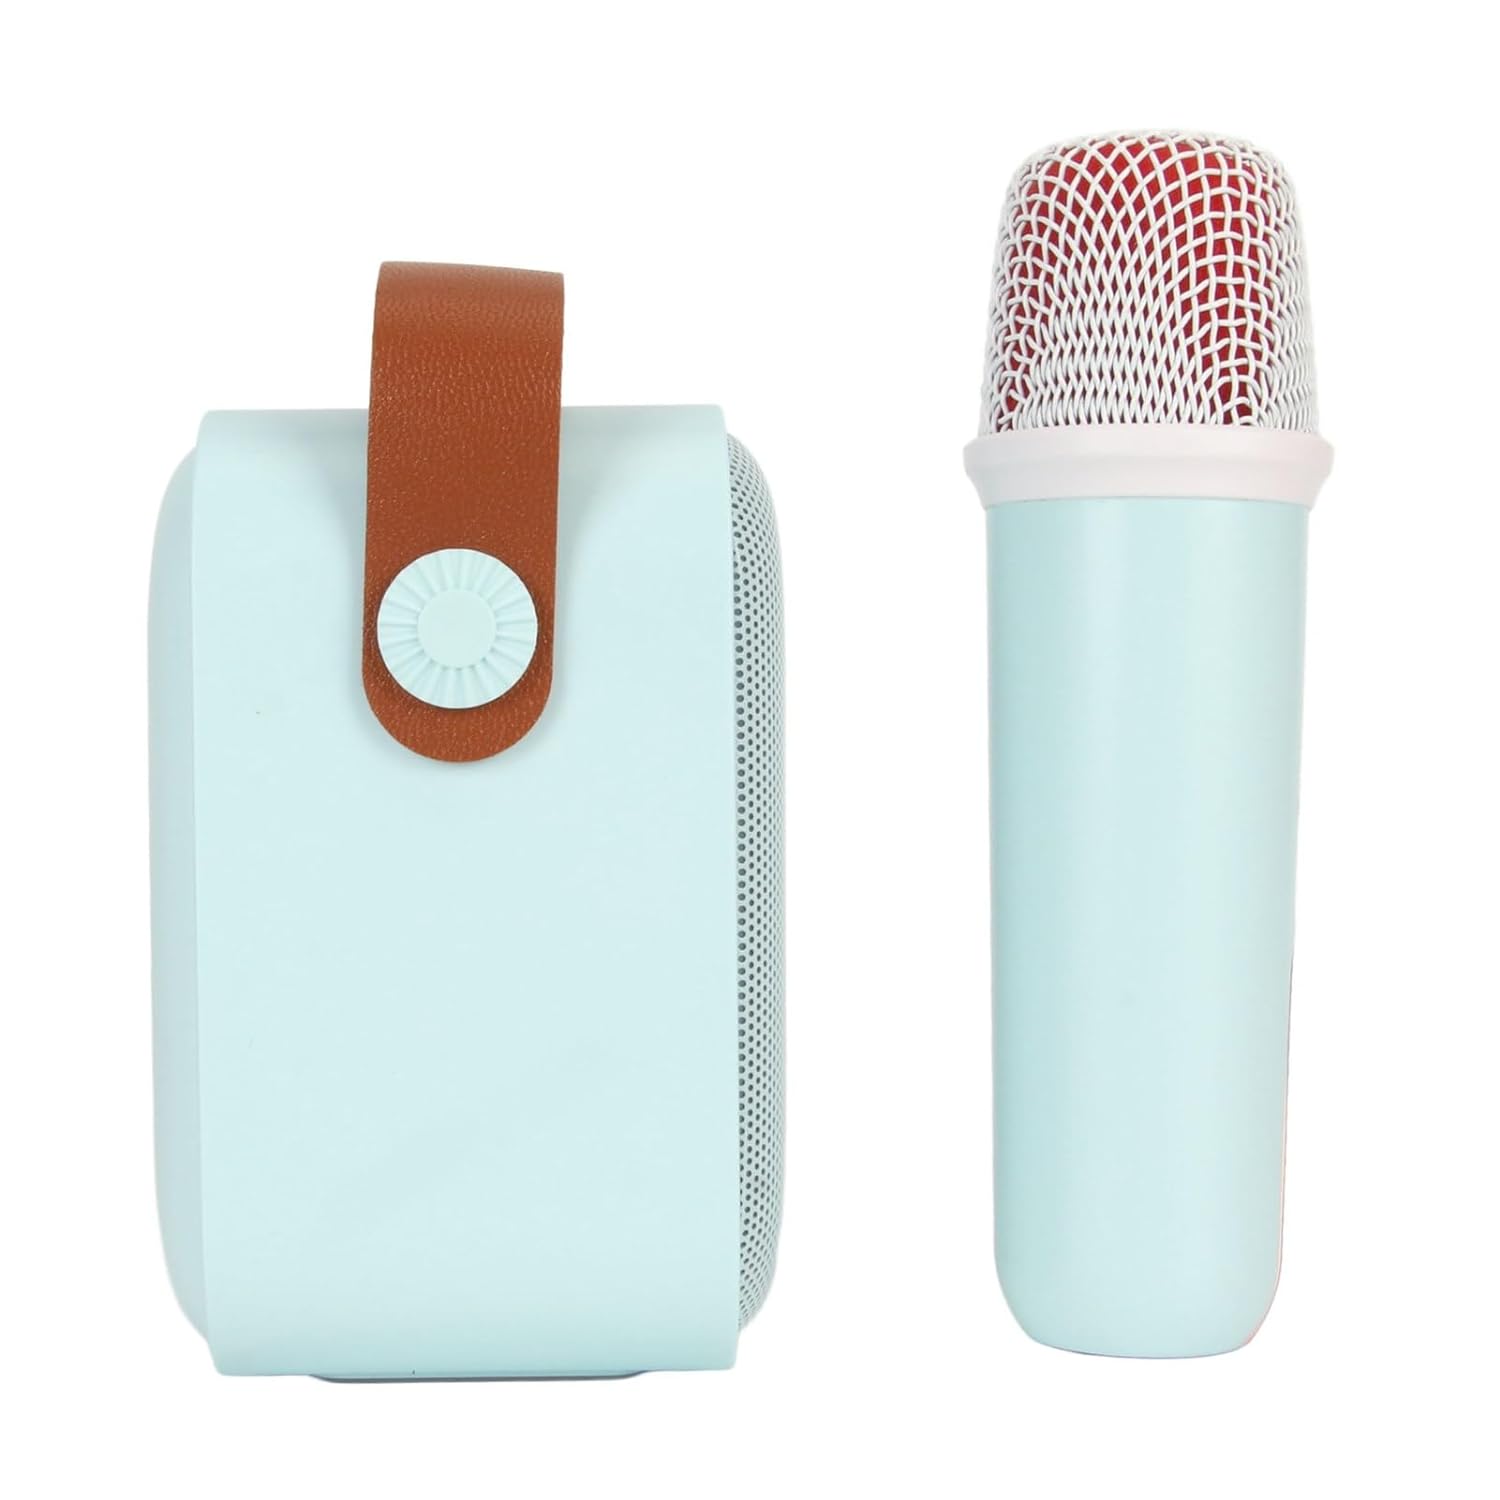 Portable BTSpeaker Mini Karaoke Machine Set with 1 Wireless Microphone,BTMicrophone Karaoke for Home Party KTV (Green)